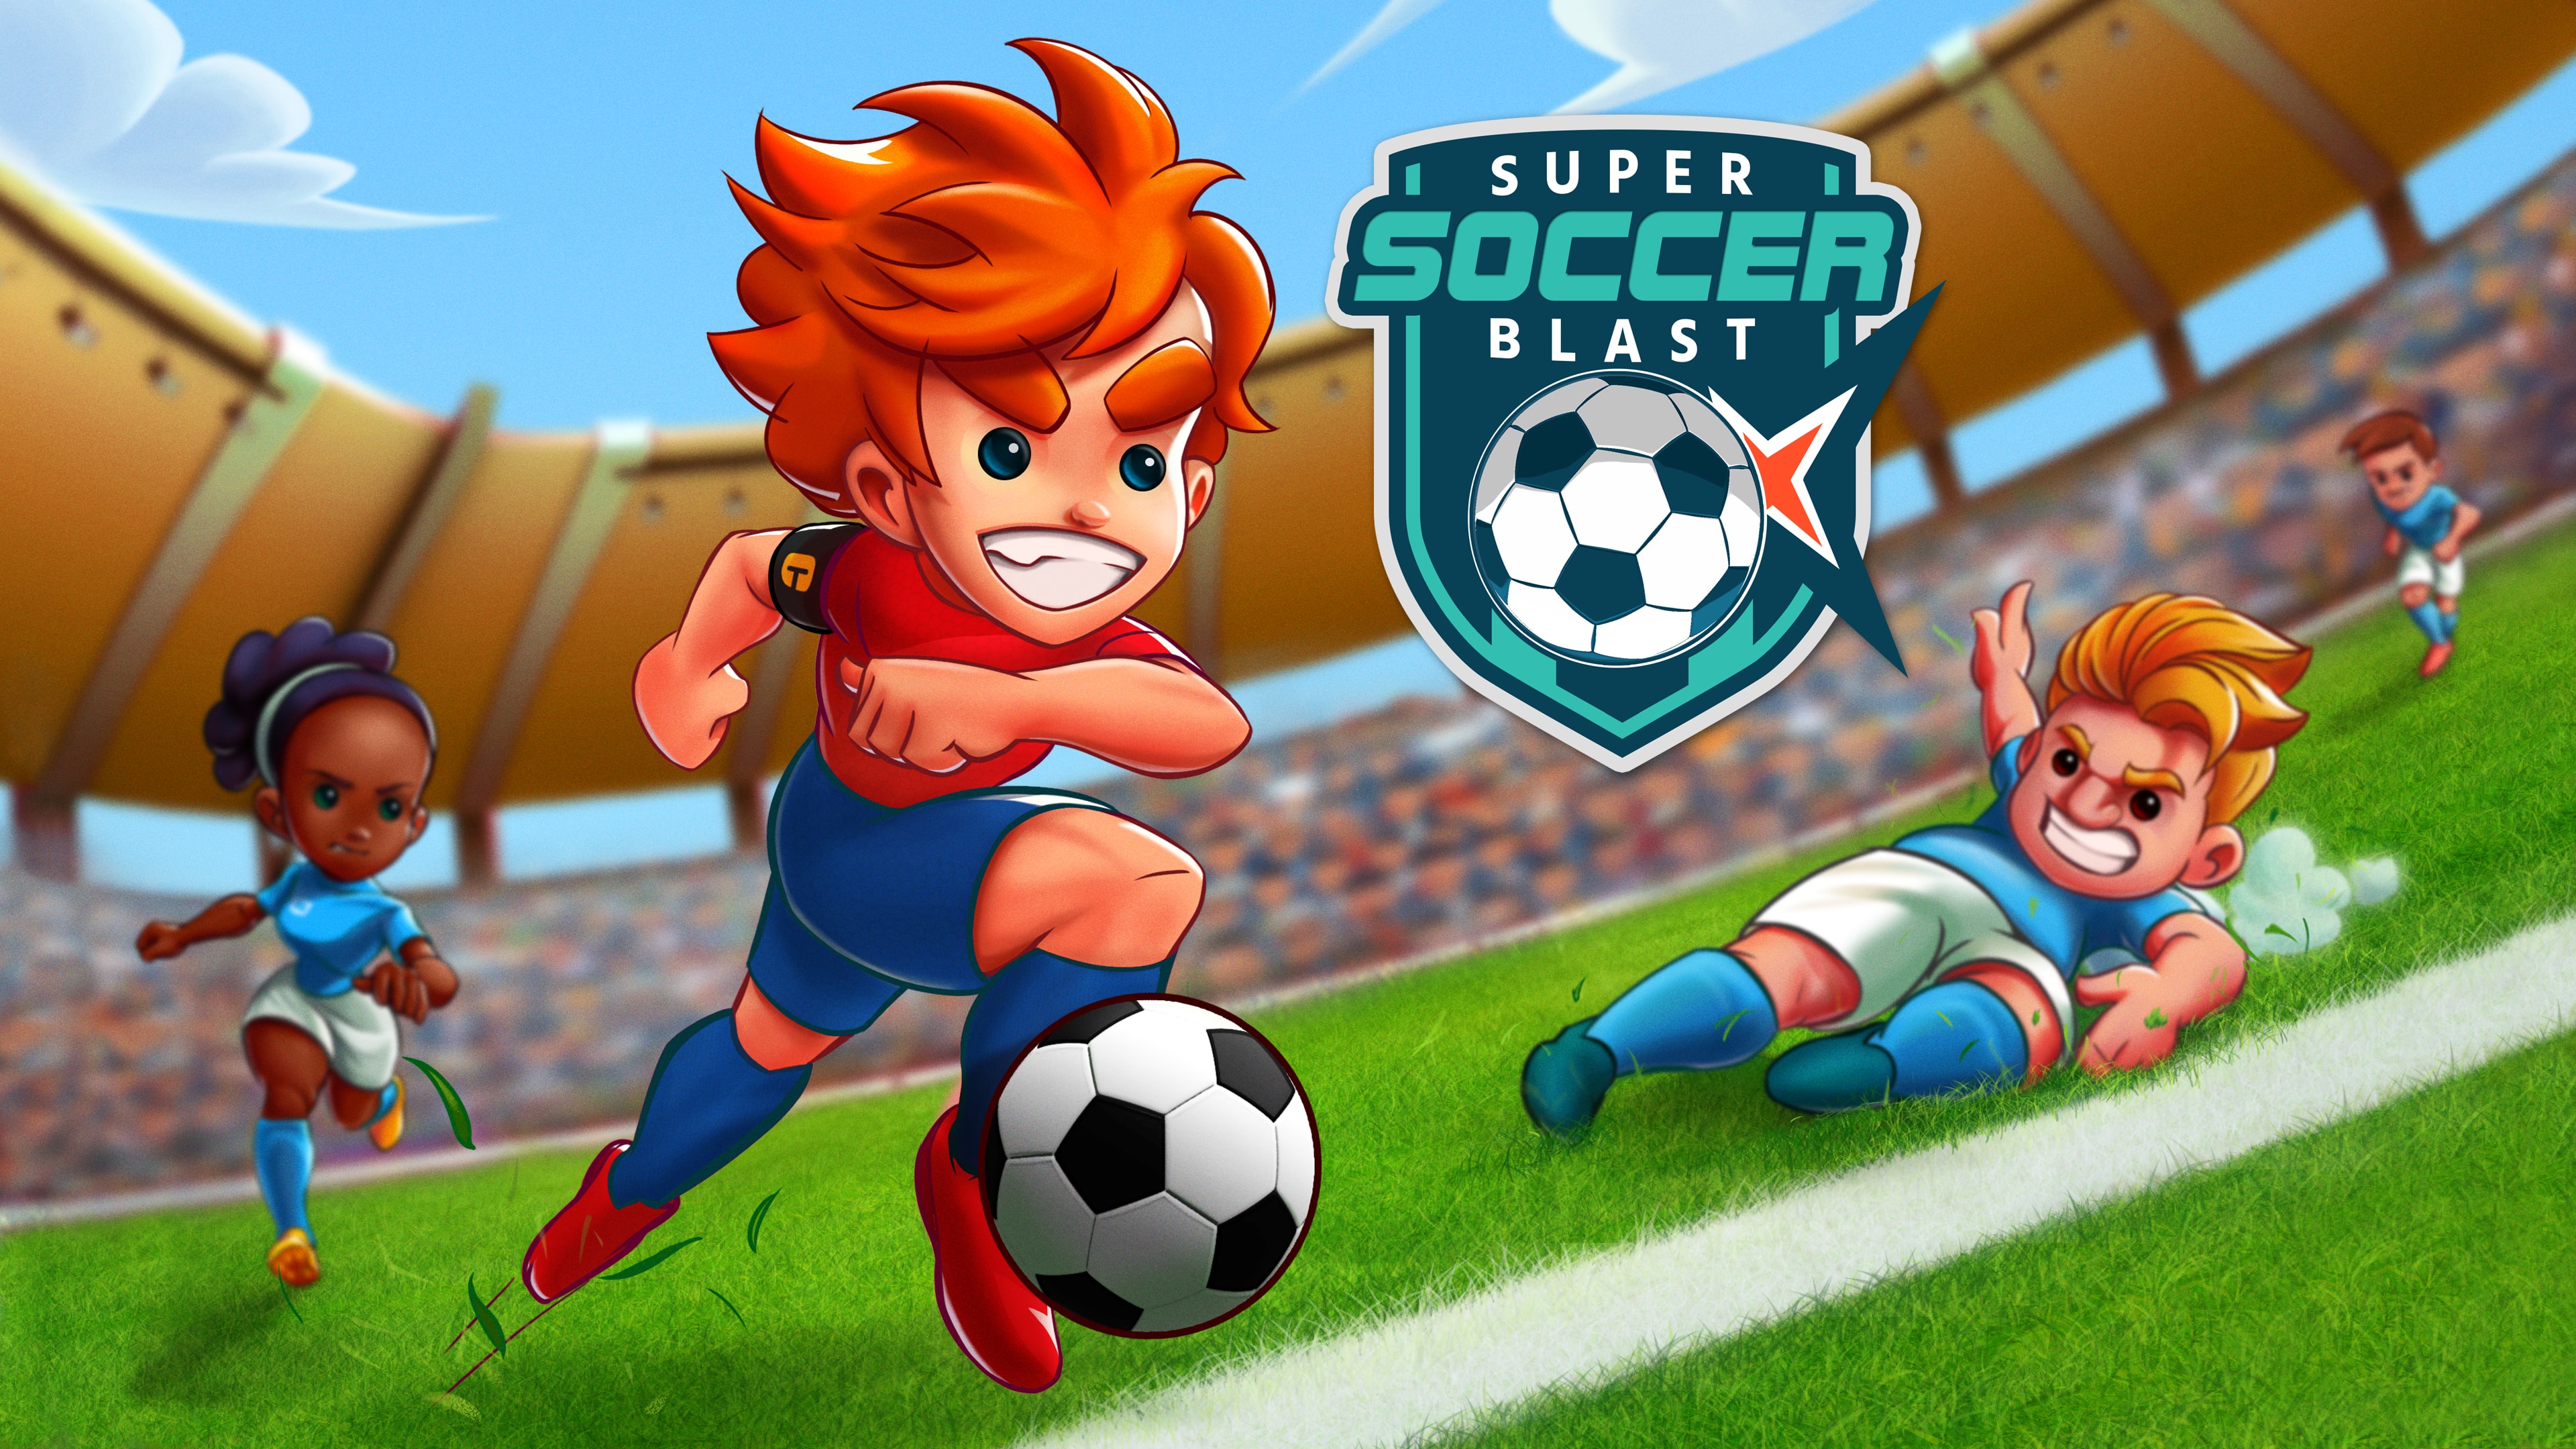 Super Soccer Blast